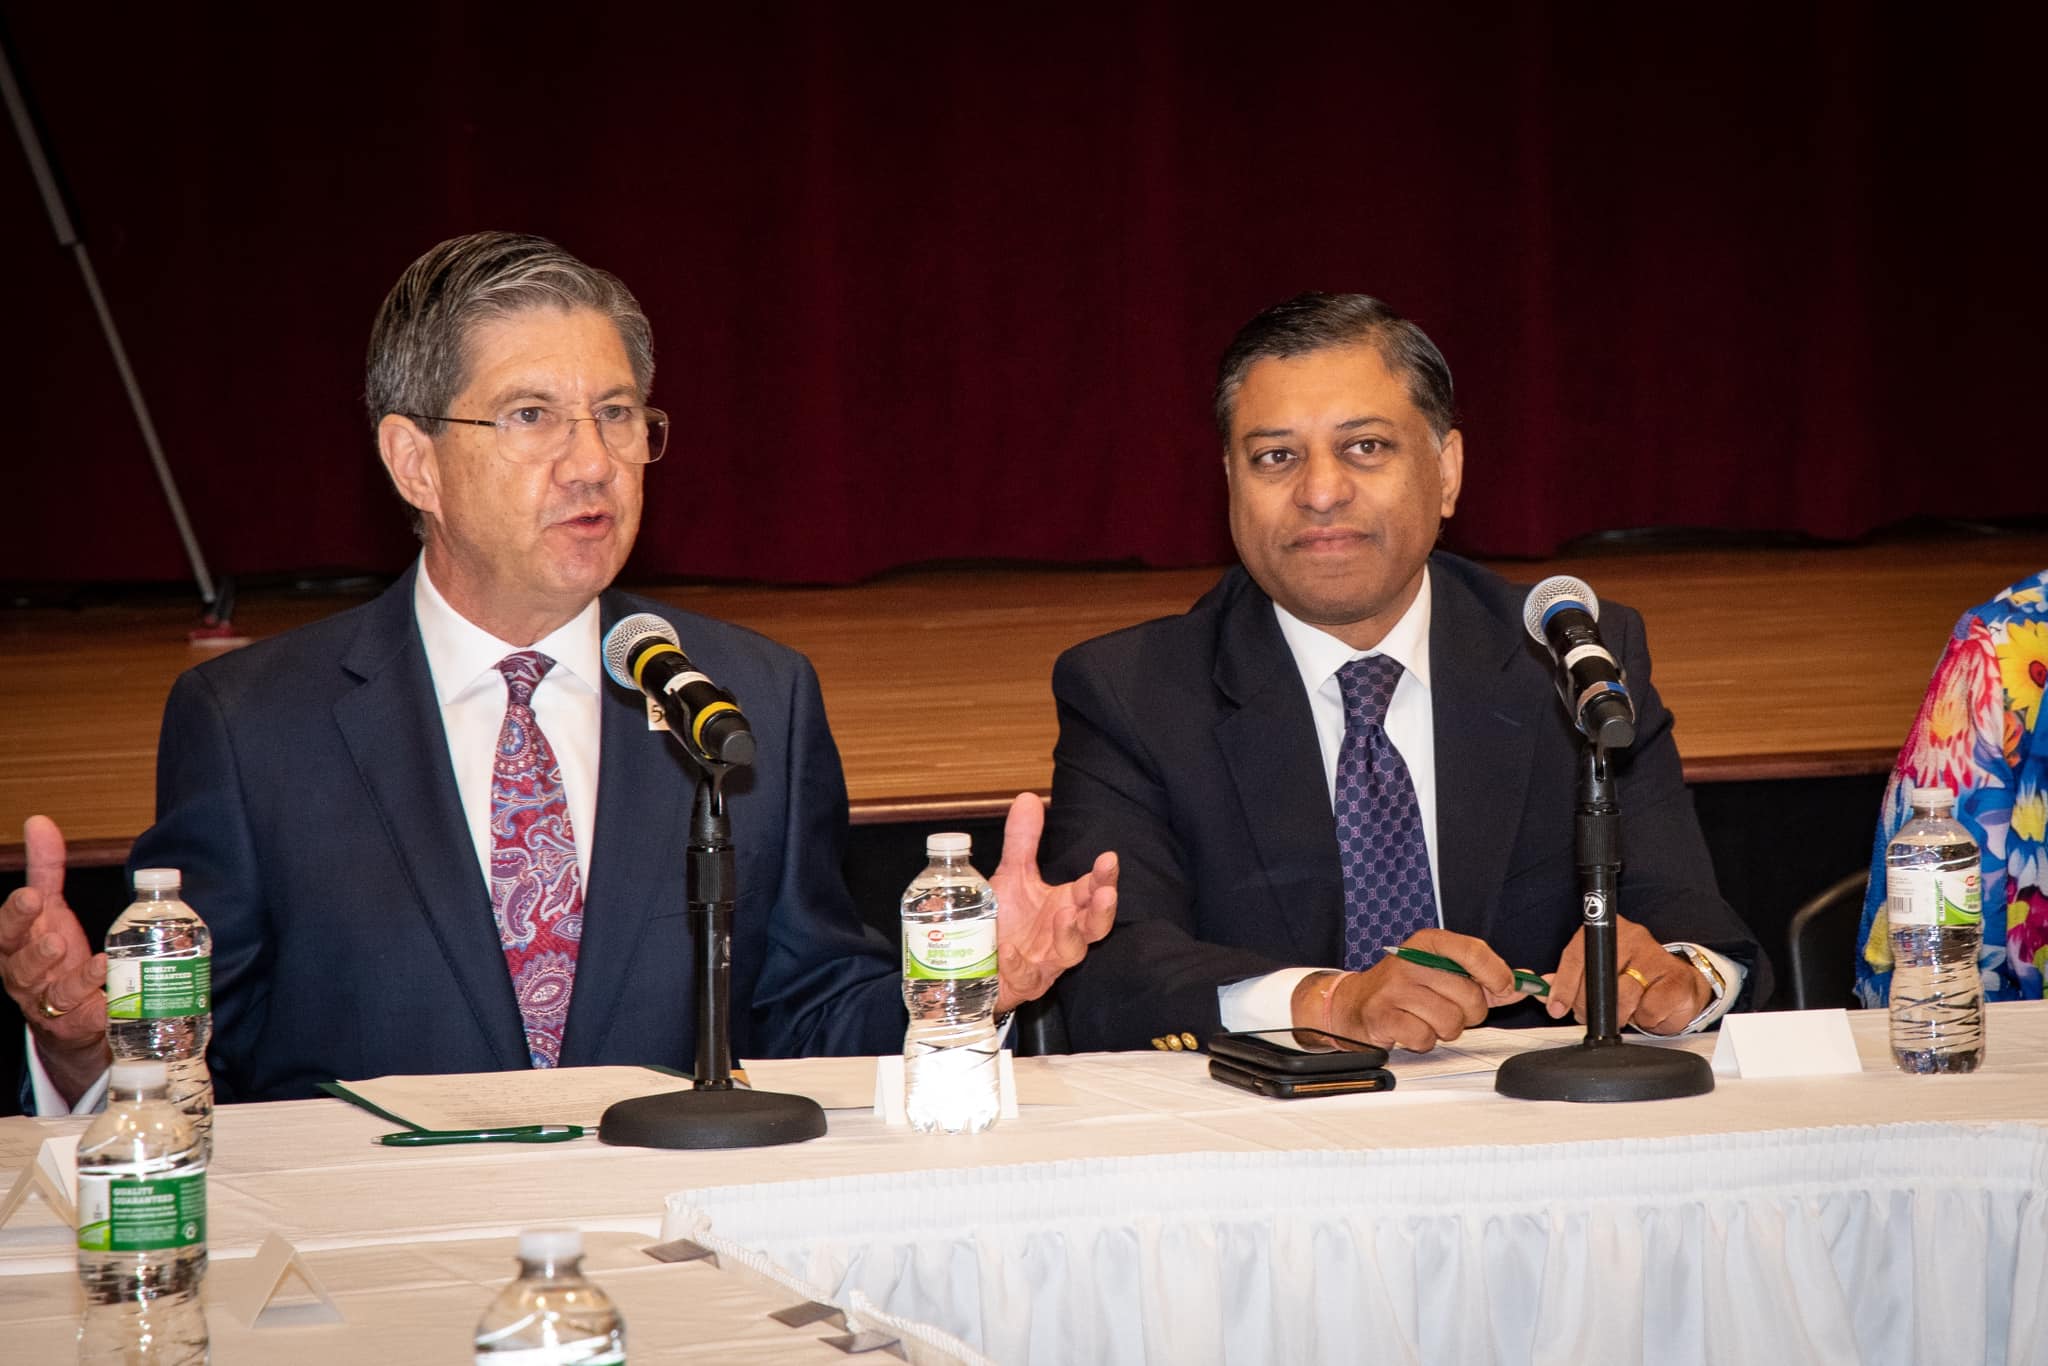 Drs. Gupta and Nemitz roundtable discussion